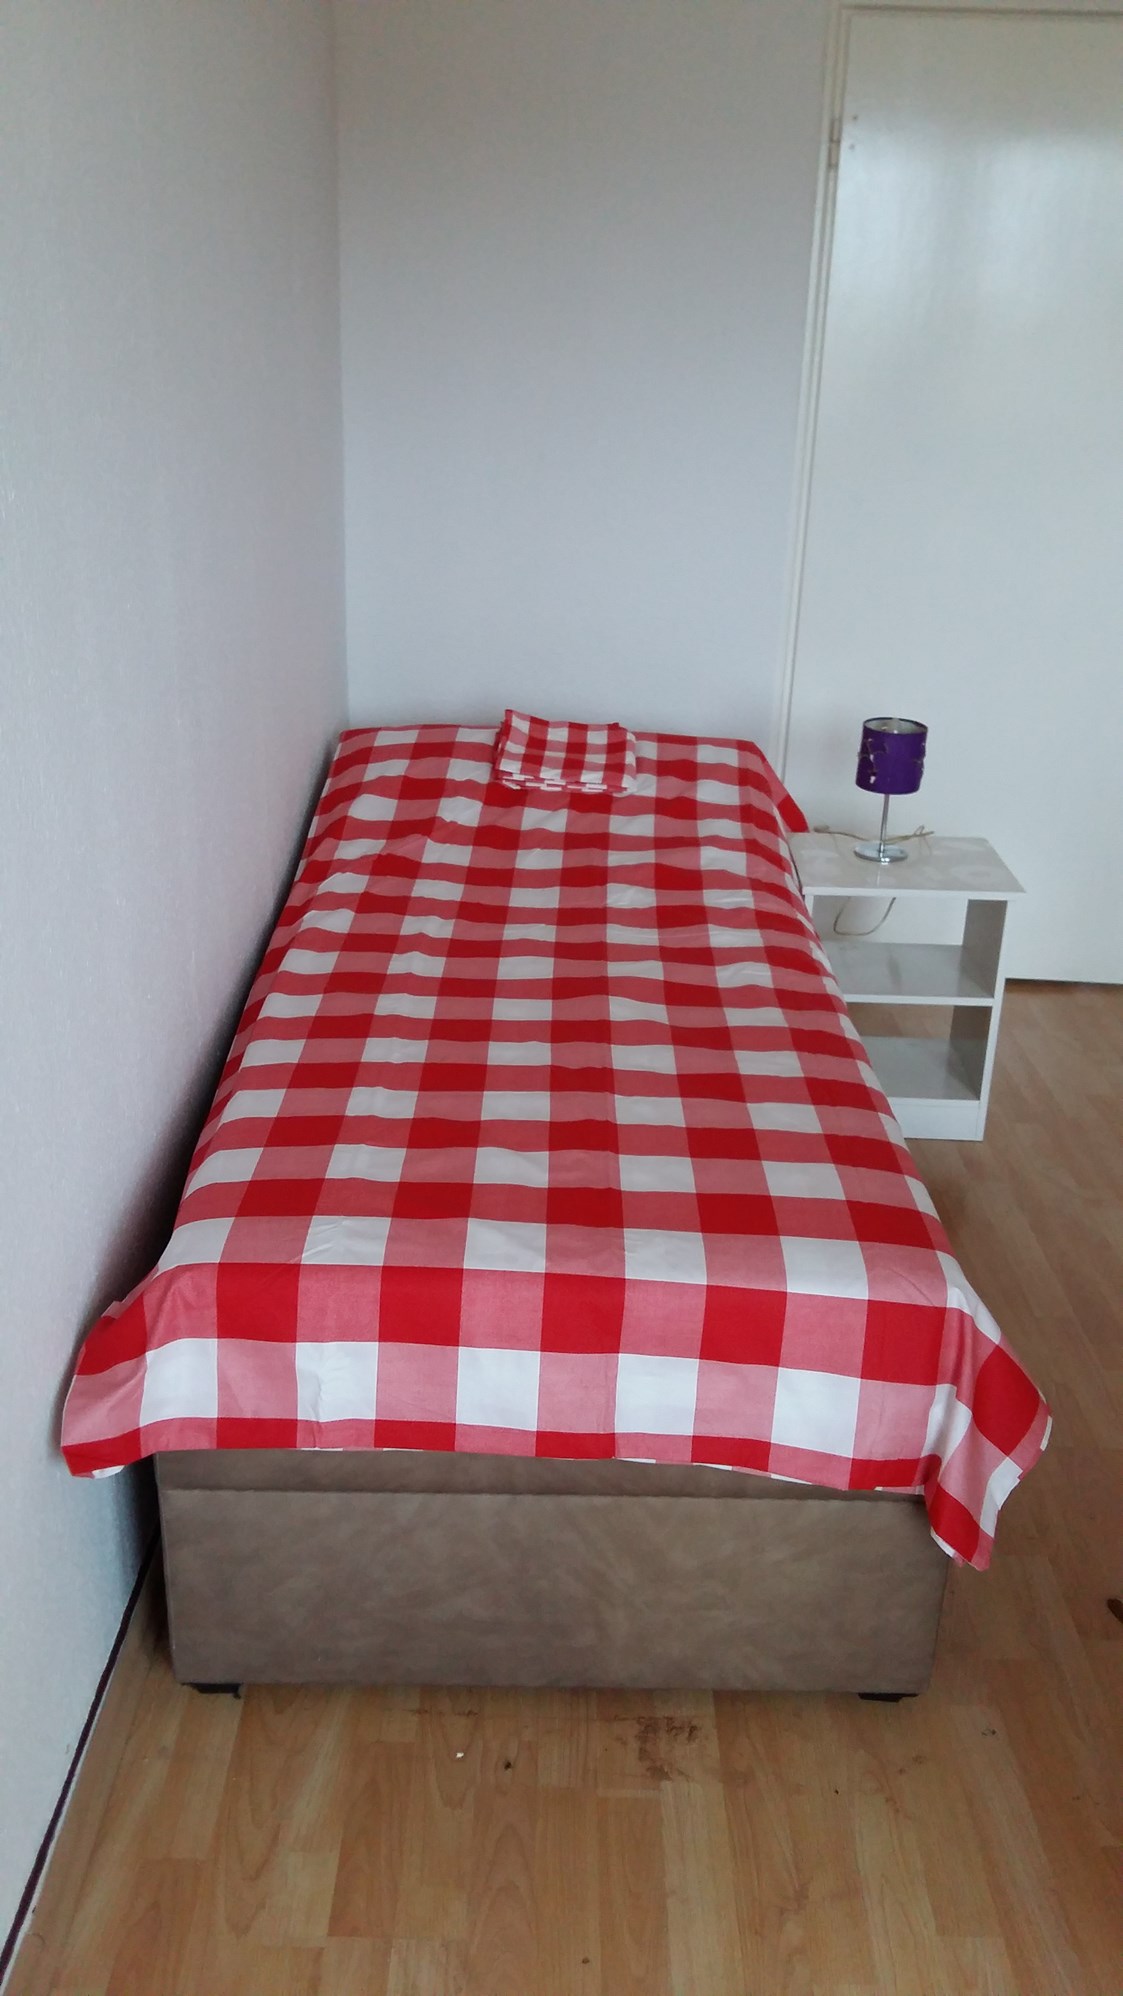 Monteurzimmer: Einzelbett - ab 4,80 Euro p. P 1-4 Zi. Wohnung Nah Berlin-Spandau bei Rathenow/Semelin Fechesar Golfplatz 